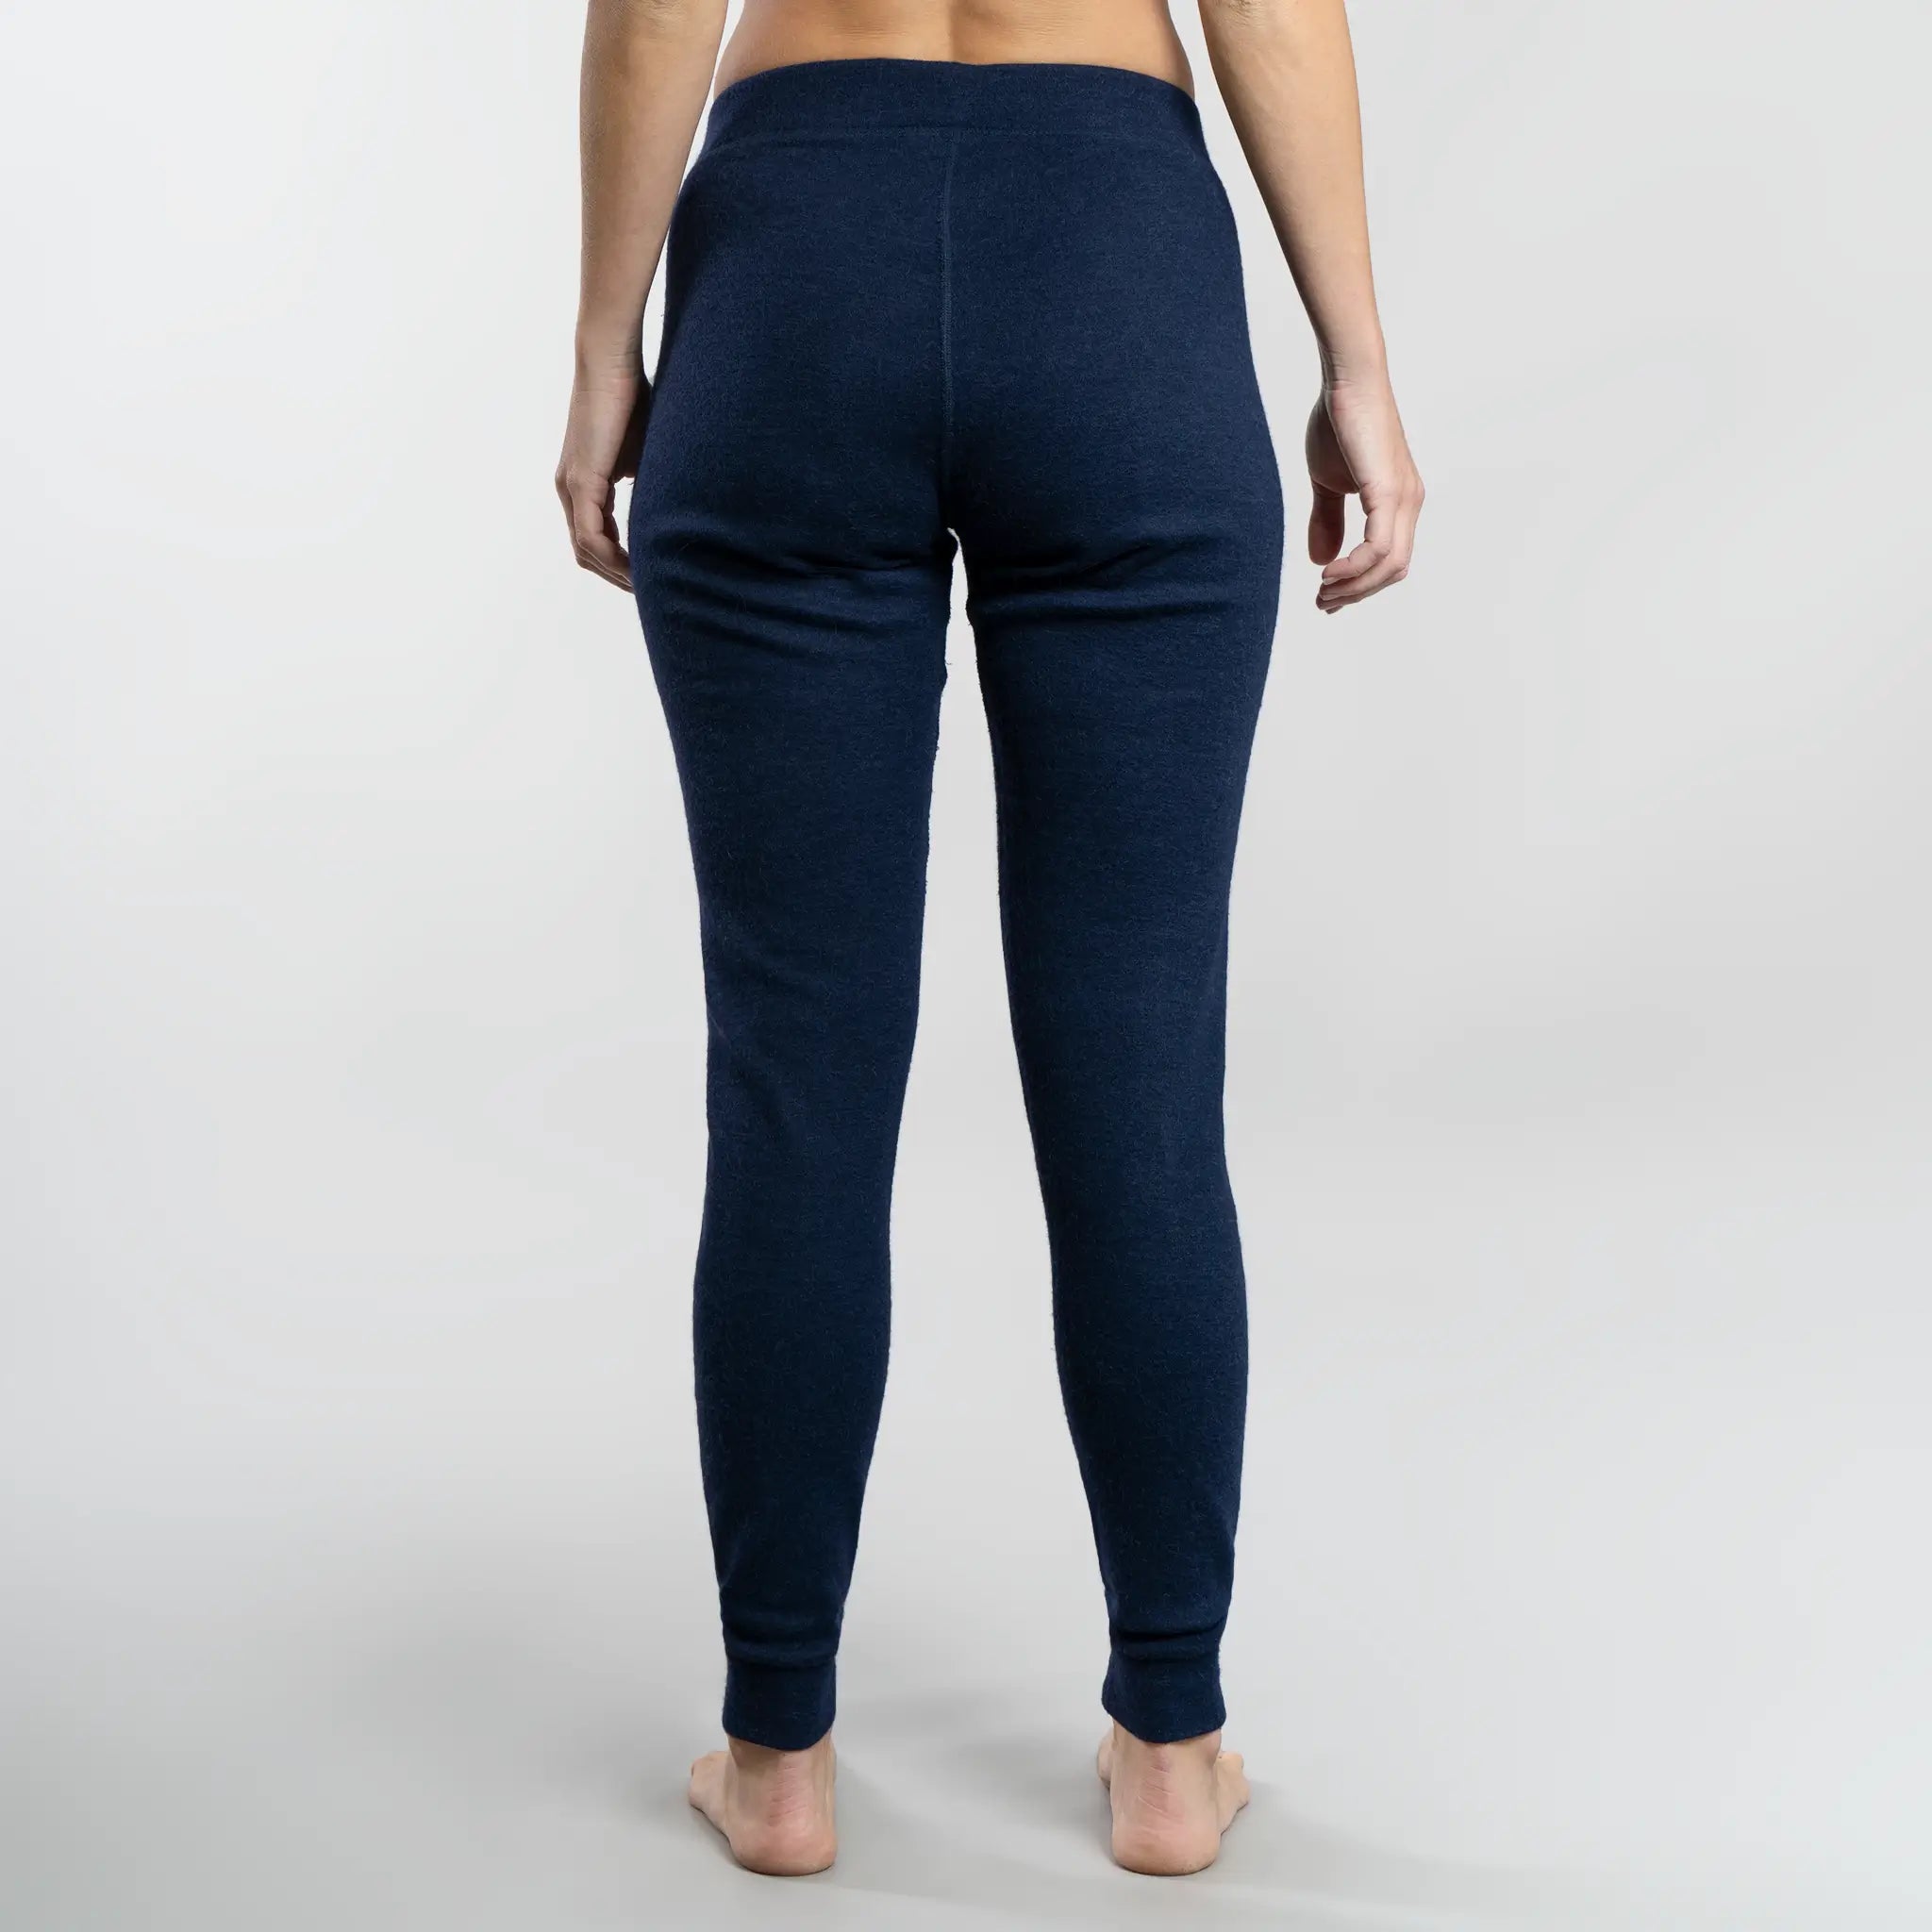 Kalanji - Decathlon track pants | Track pants, Pant shopping, Clothes design